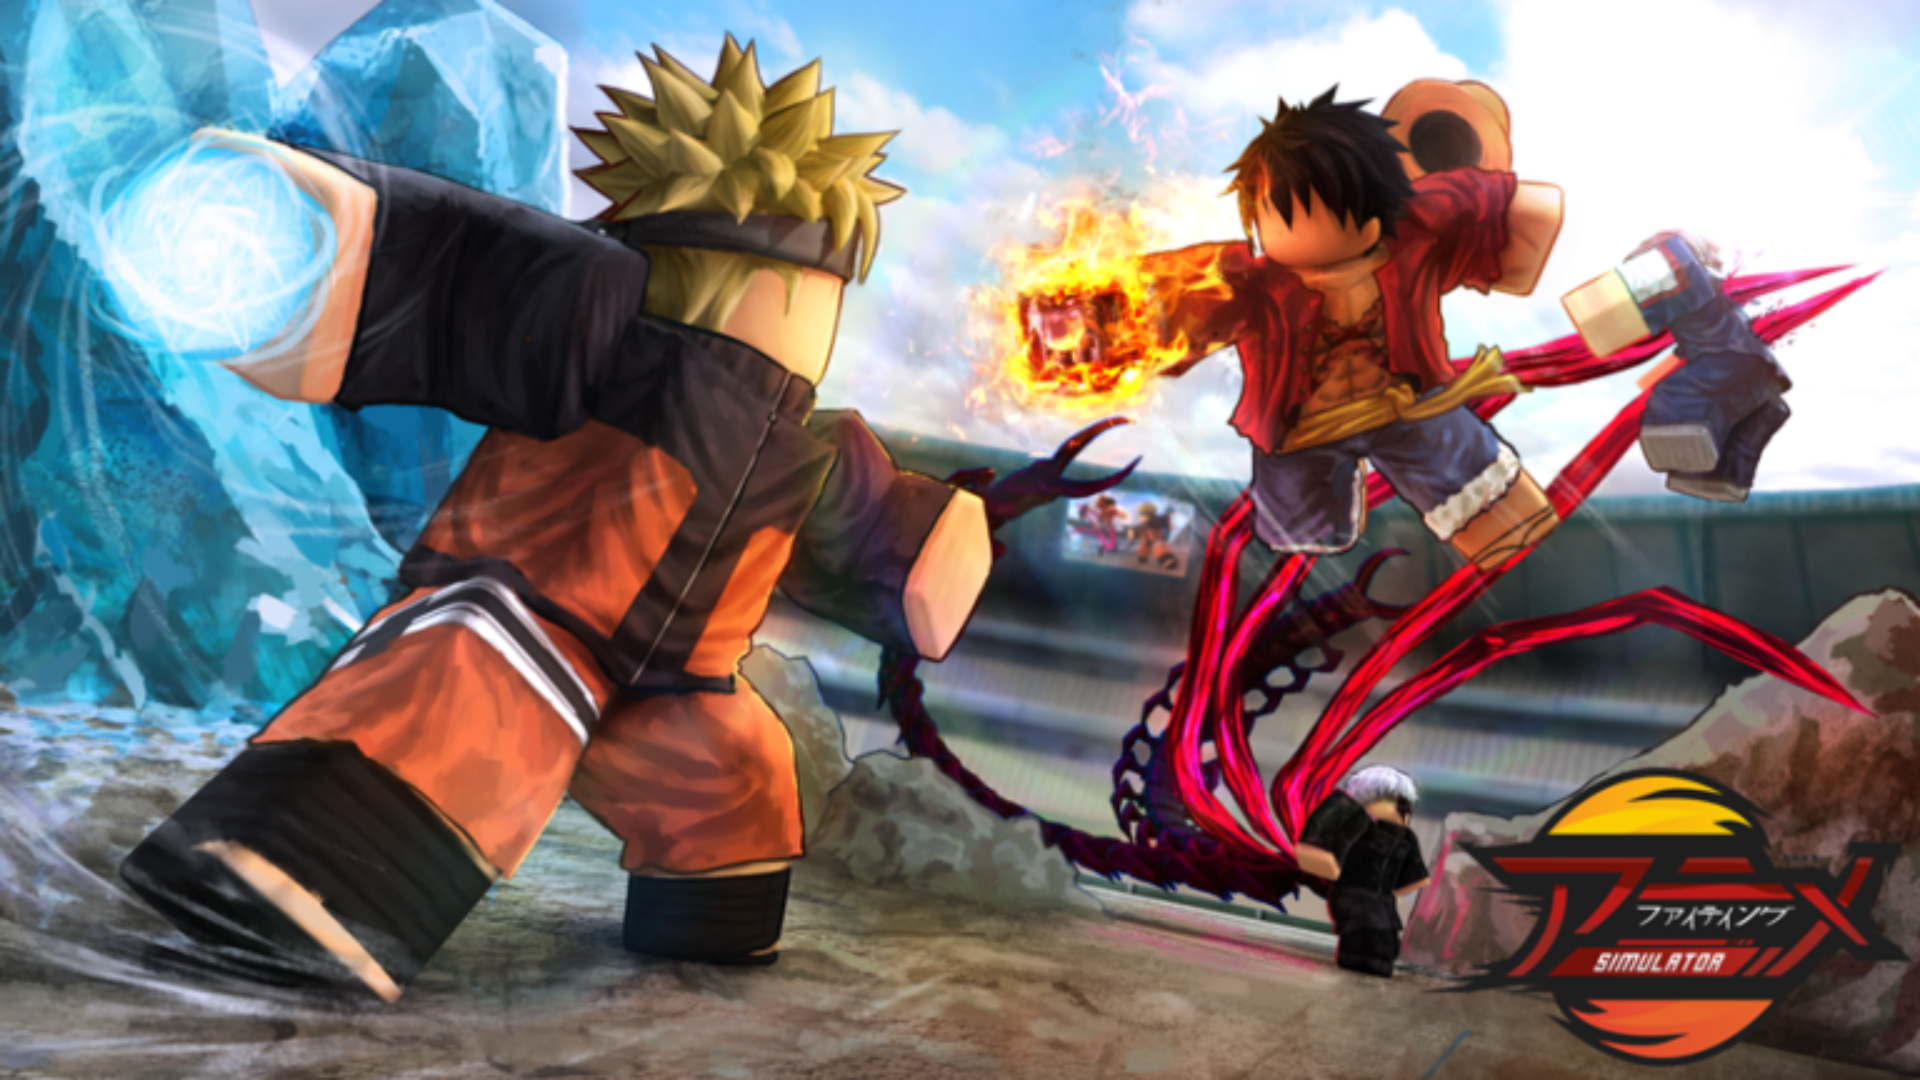 Roblox Anime Fighting Simulator codes for Yen and Chikara | GamesRadar+